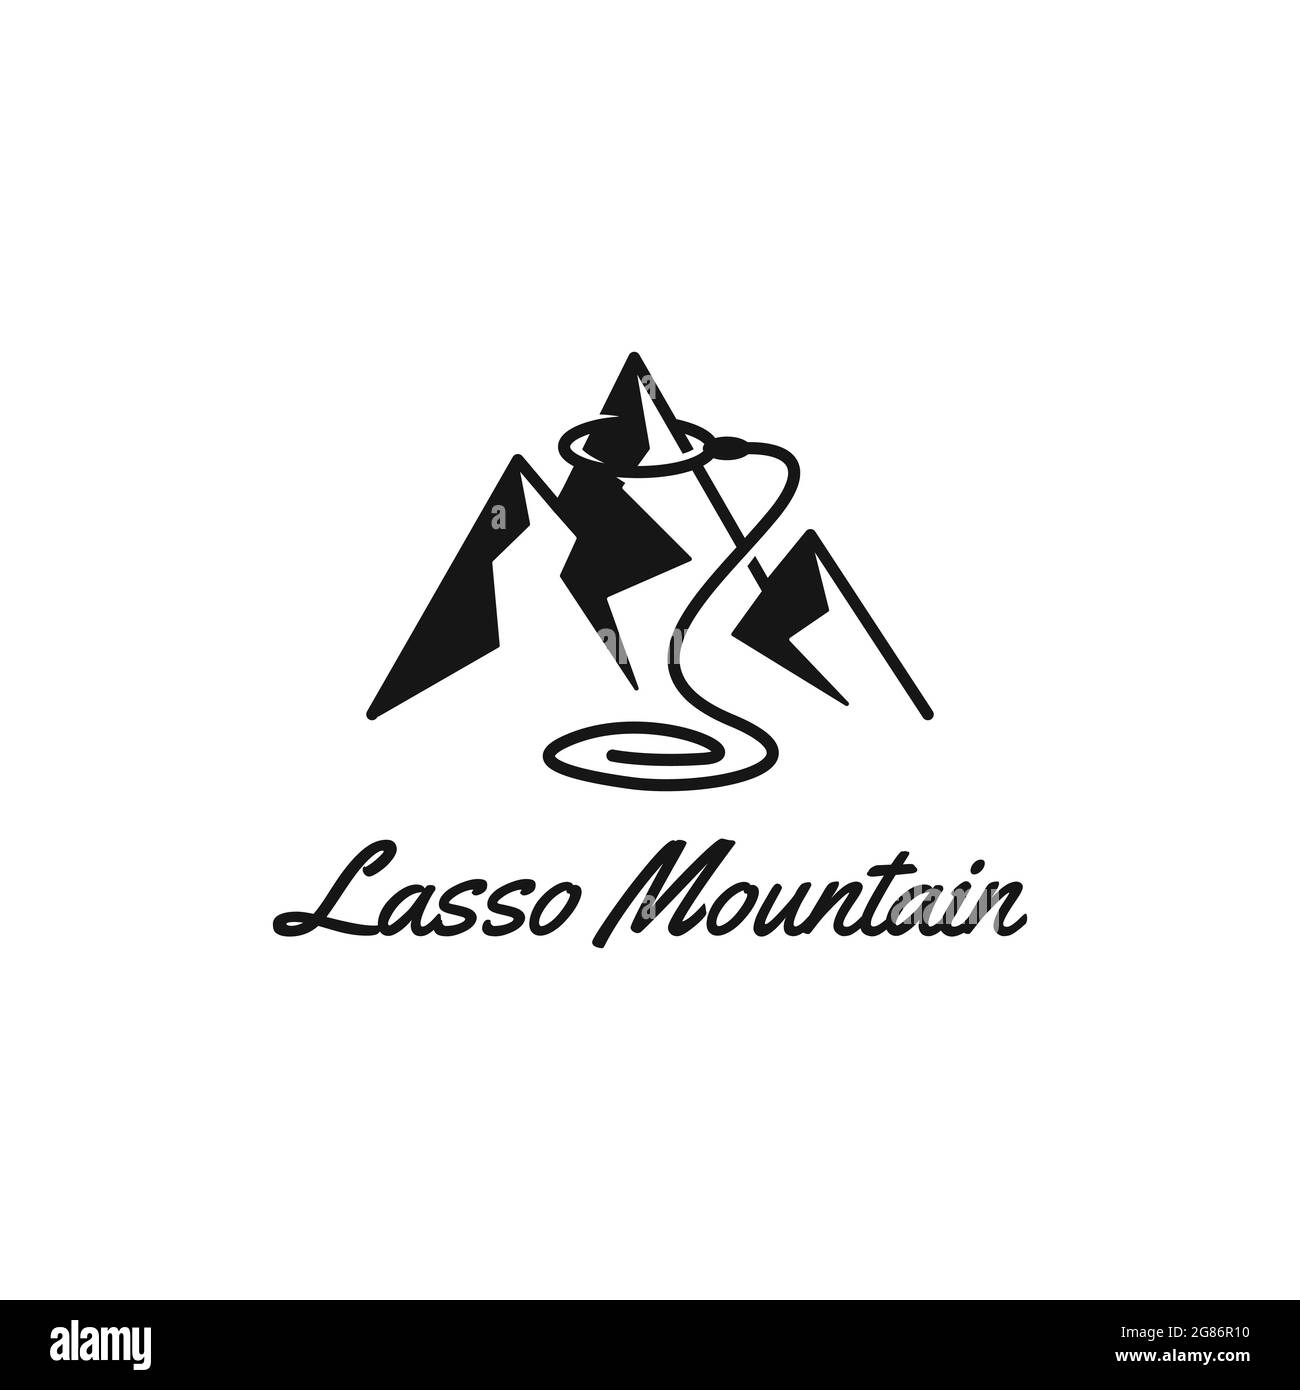 https://c8.alamy.com/comp/2G86R10/modern-mountain-logo-with-cowboy-lasso-rope-cowboy-icon-and-symbol-design-vector-2G86R10.jpg